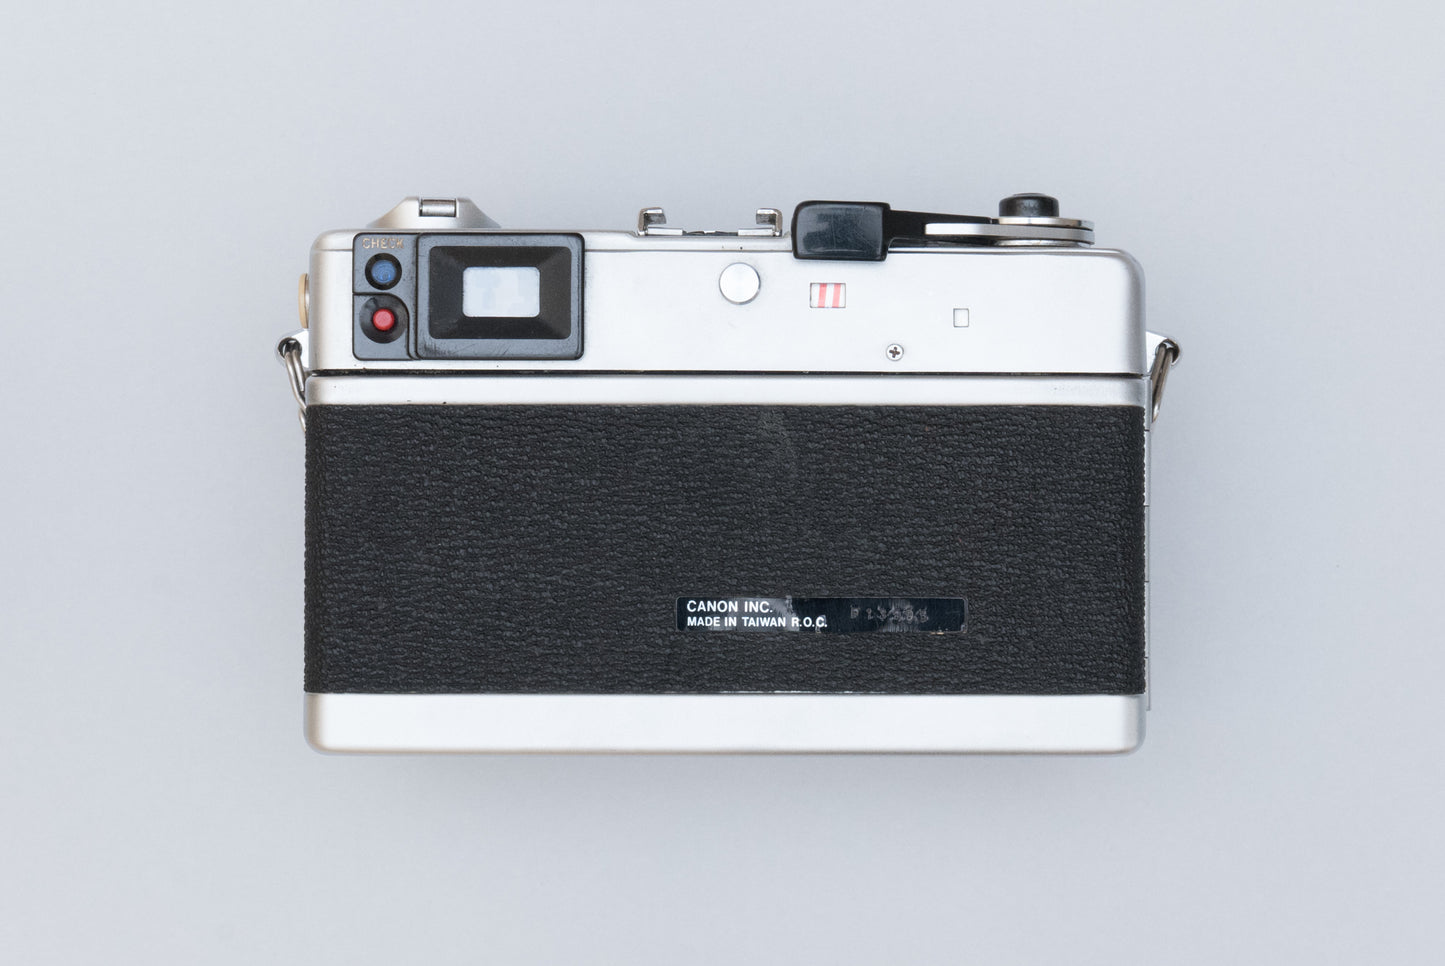 Canon Canonet G-III QL17 Rangefinder 35mm Film Camera